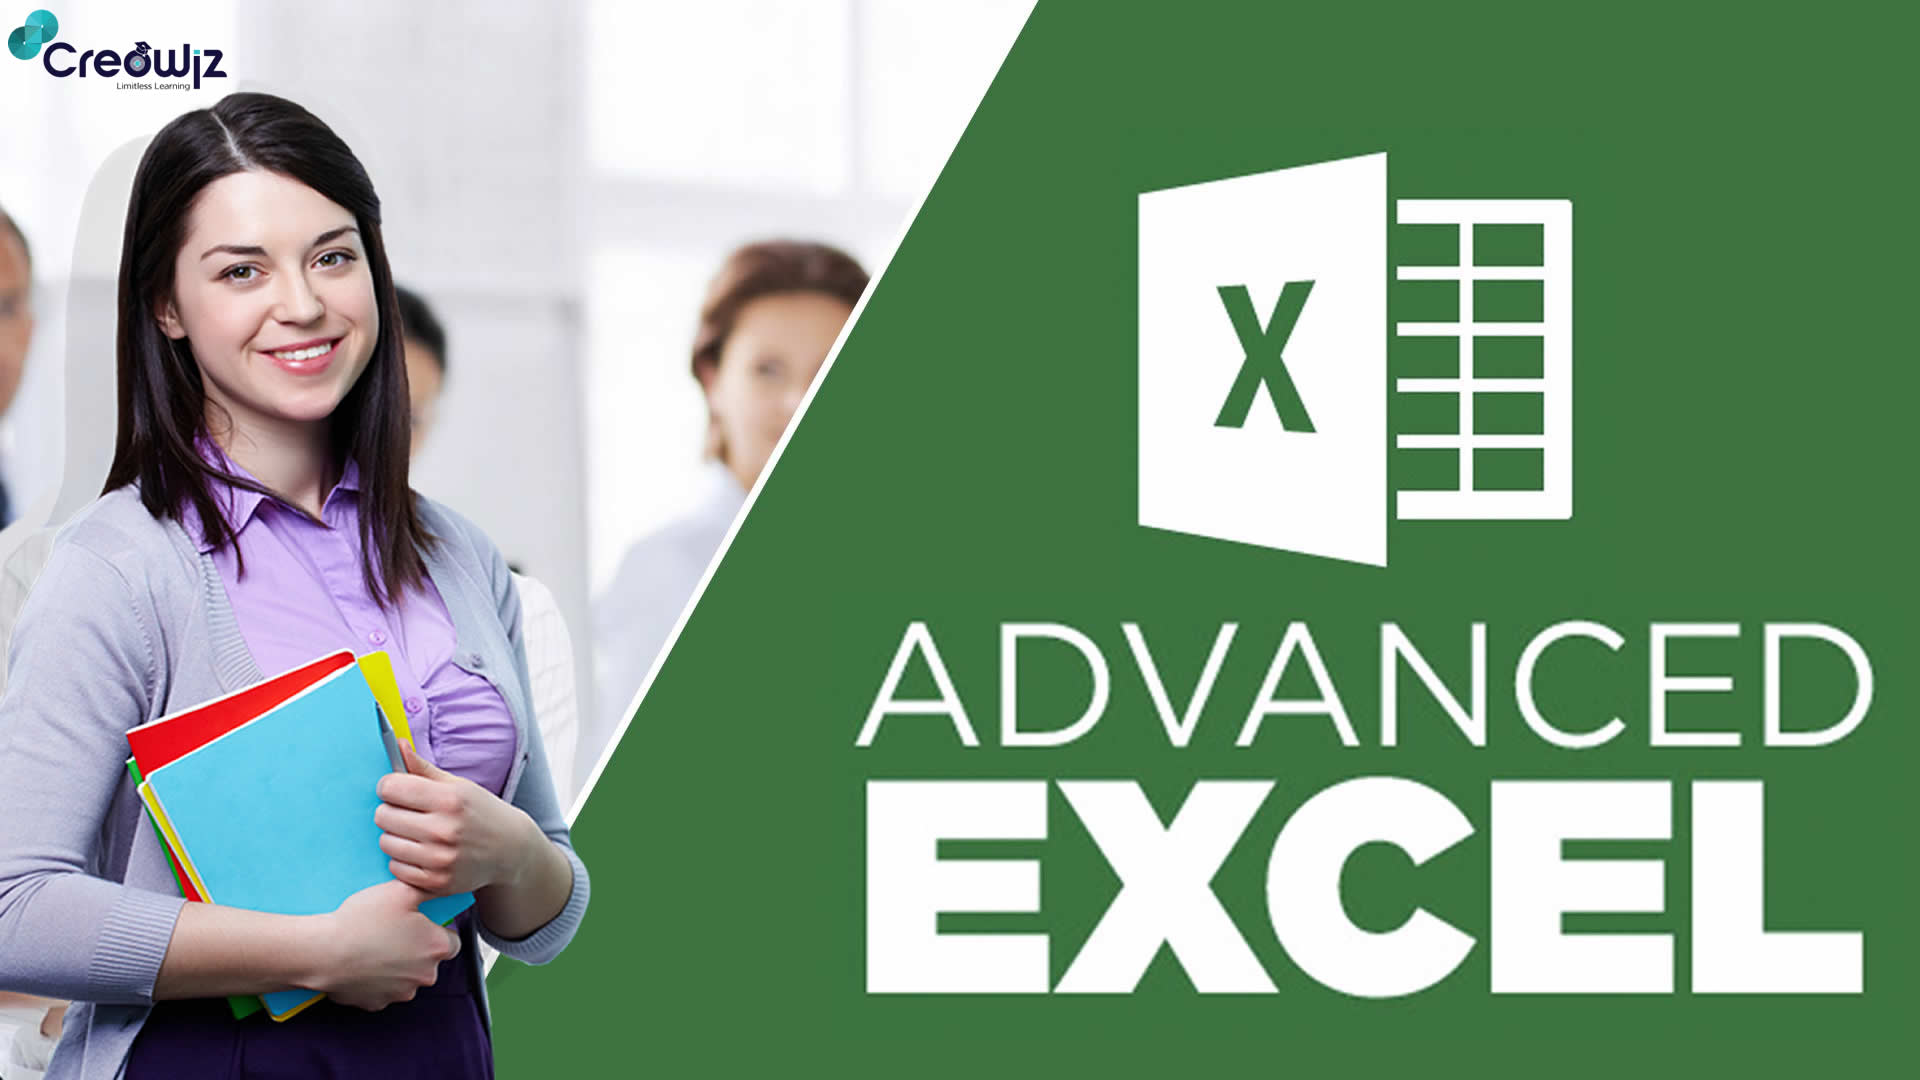 Advanced Excel